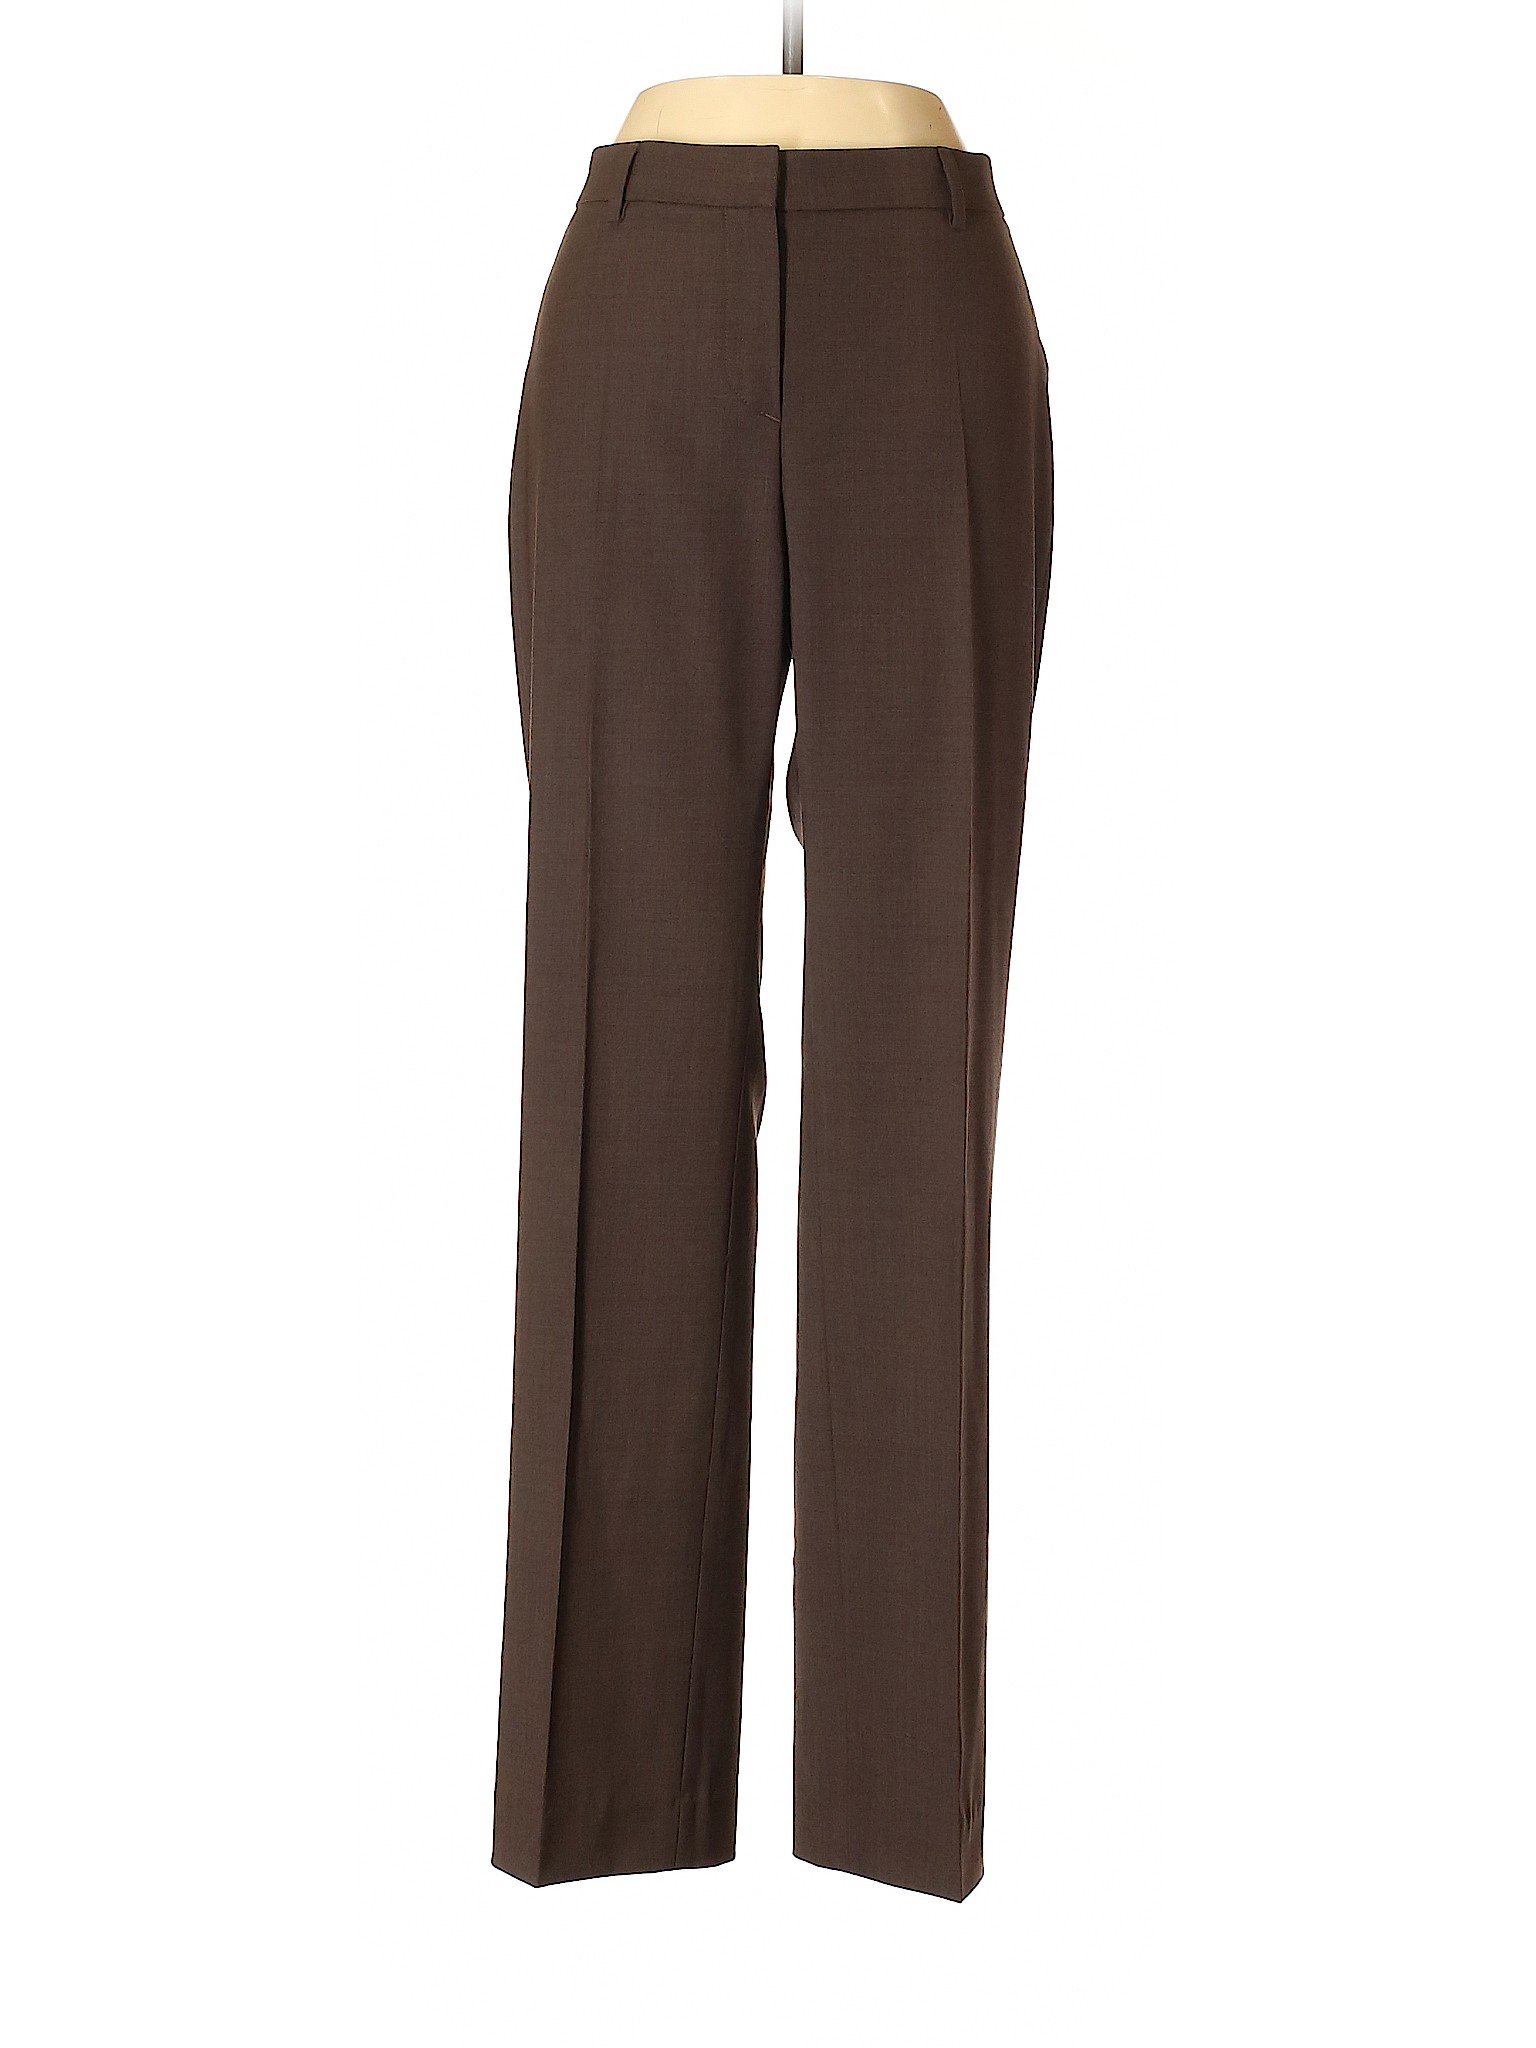 GUNEX Women Brown Wool Pants 4 | eBay